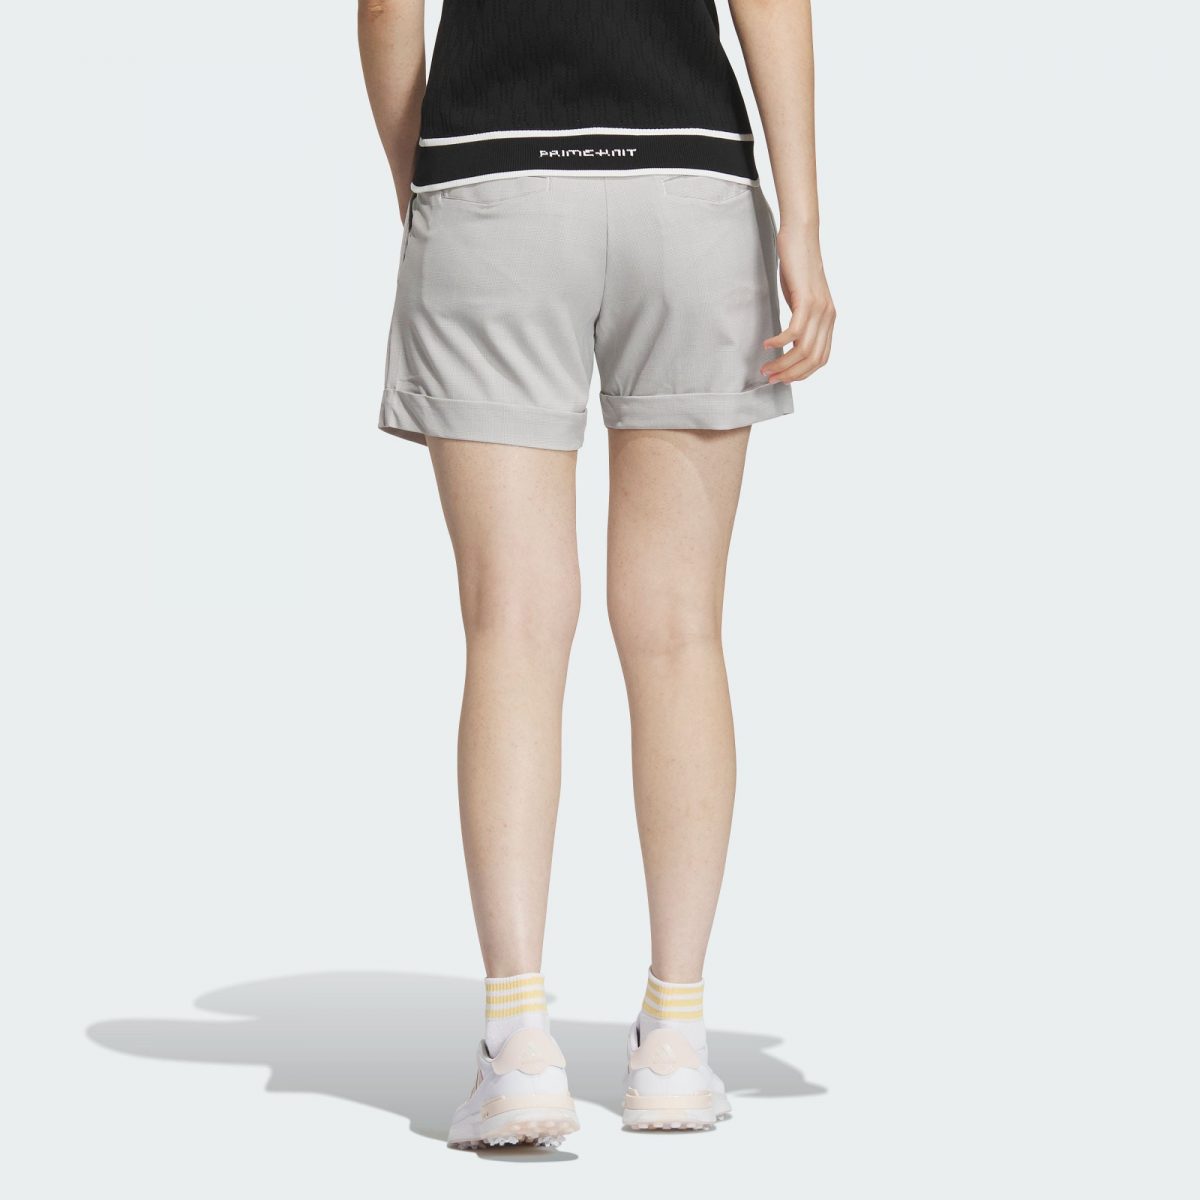 Женские шорты adidas CHECKED PATTERN 5-INCH SHORTS фотография